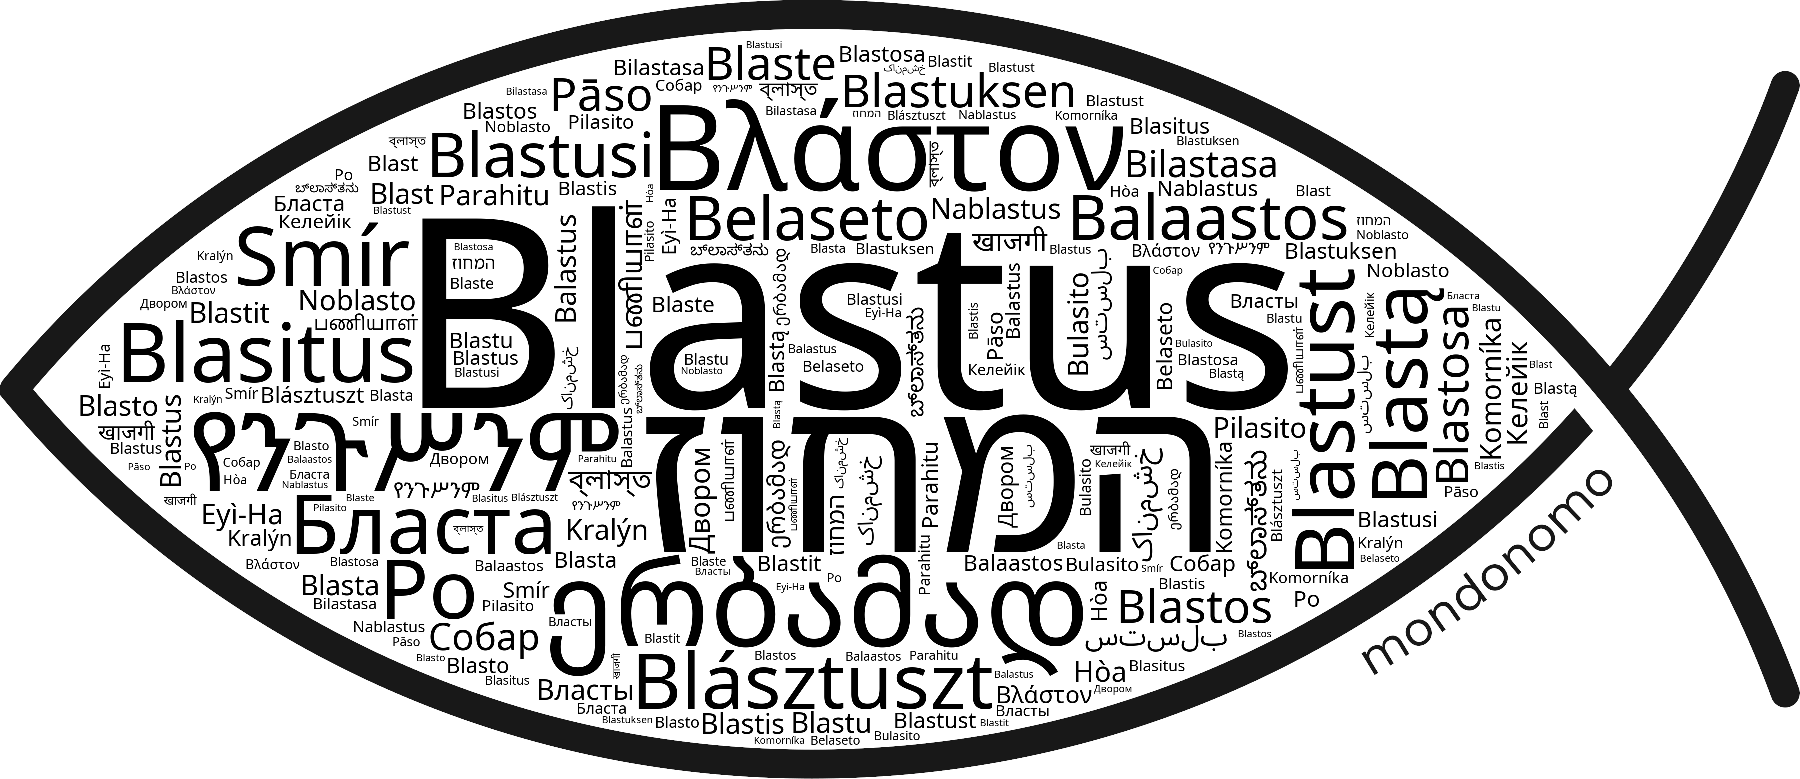 Name Blastus in the world's Bibles